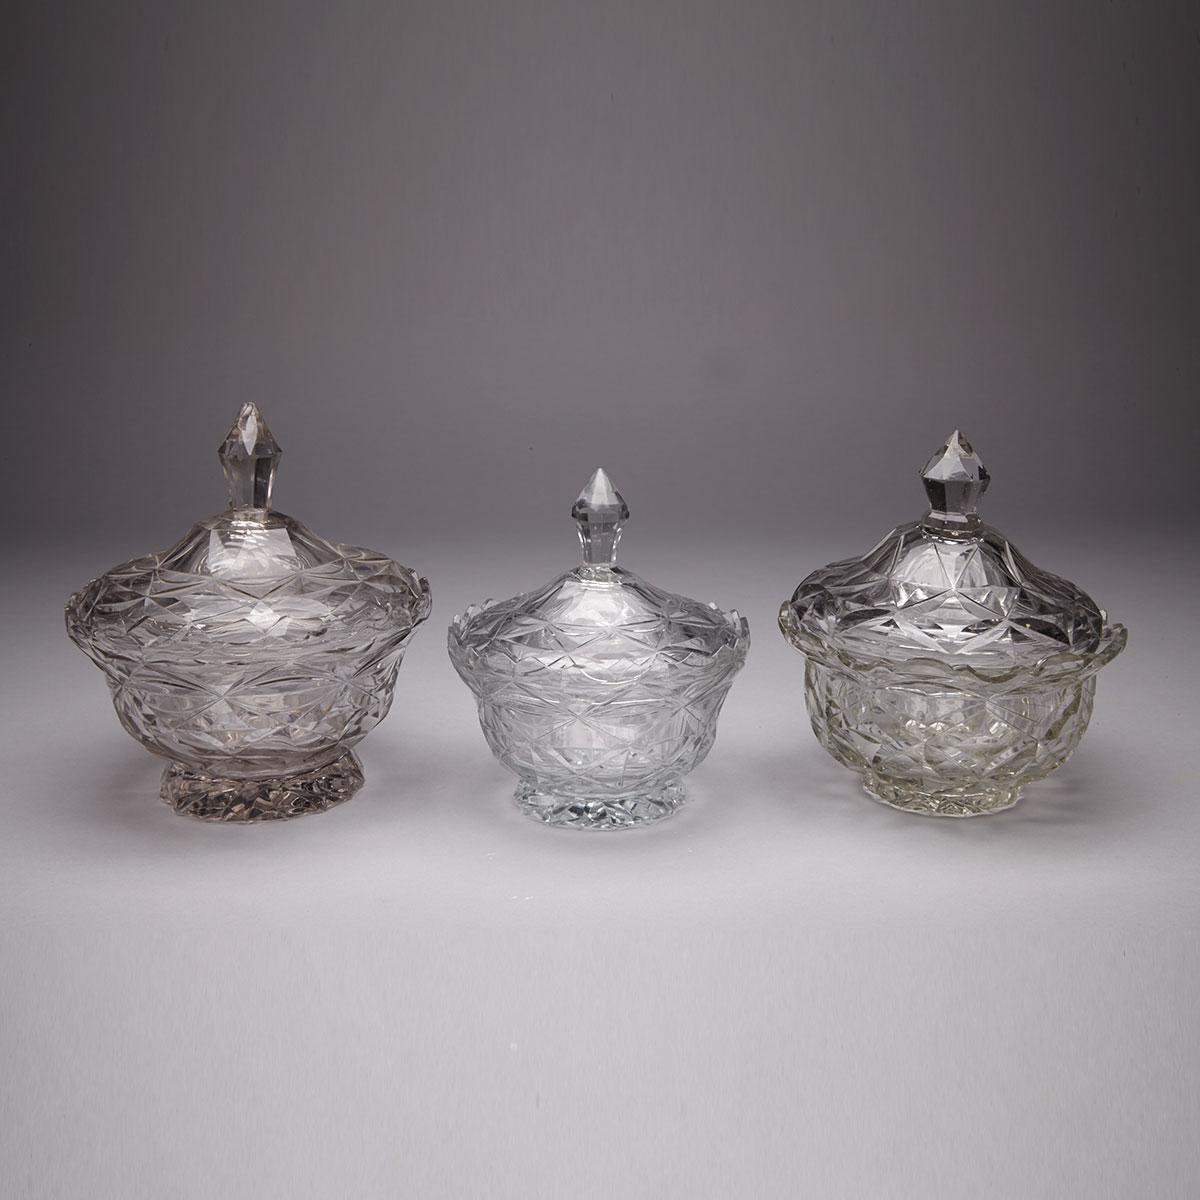 Three Anglo-Irish Cut Glass Covered Tureens, c.1800